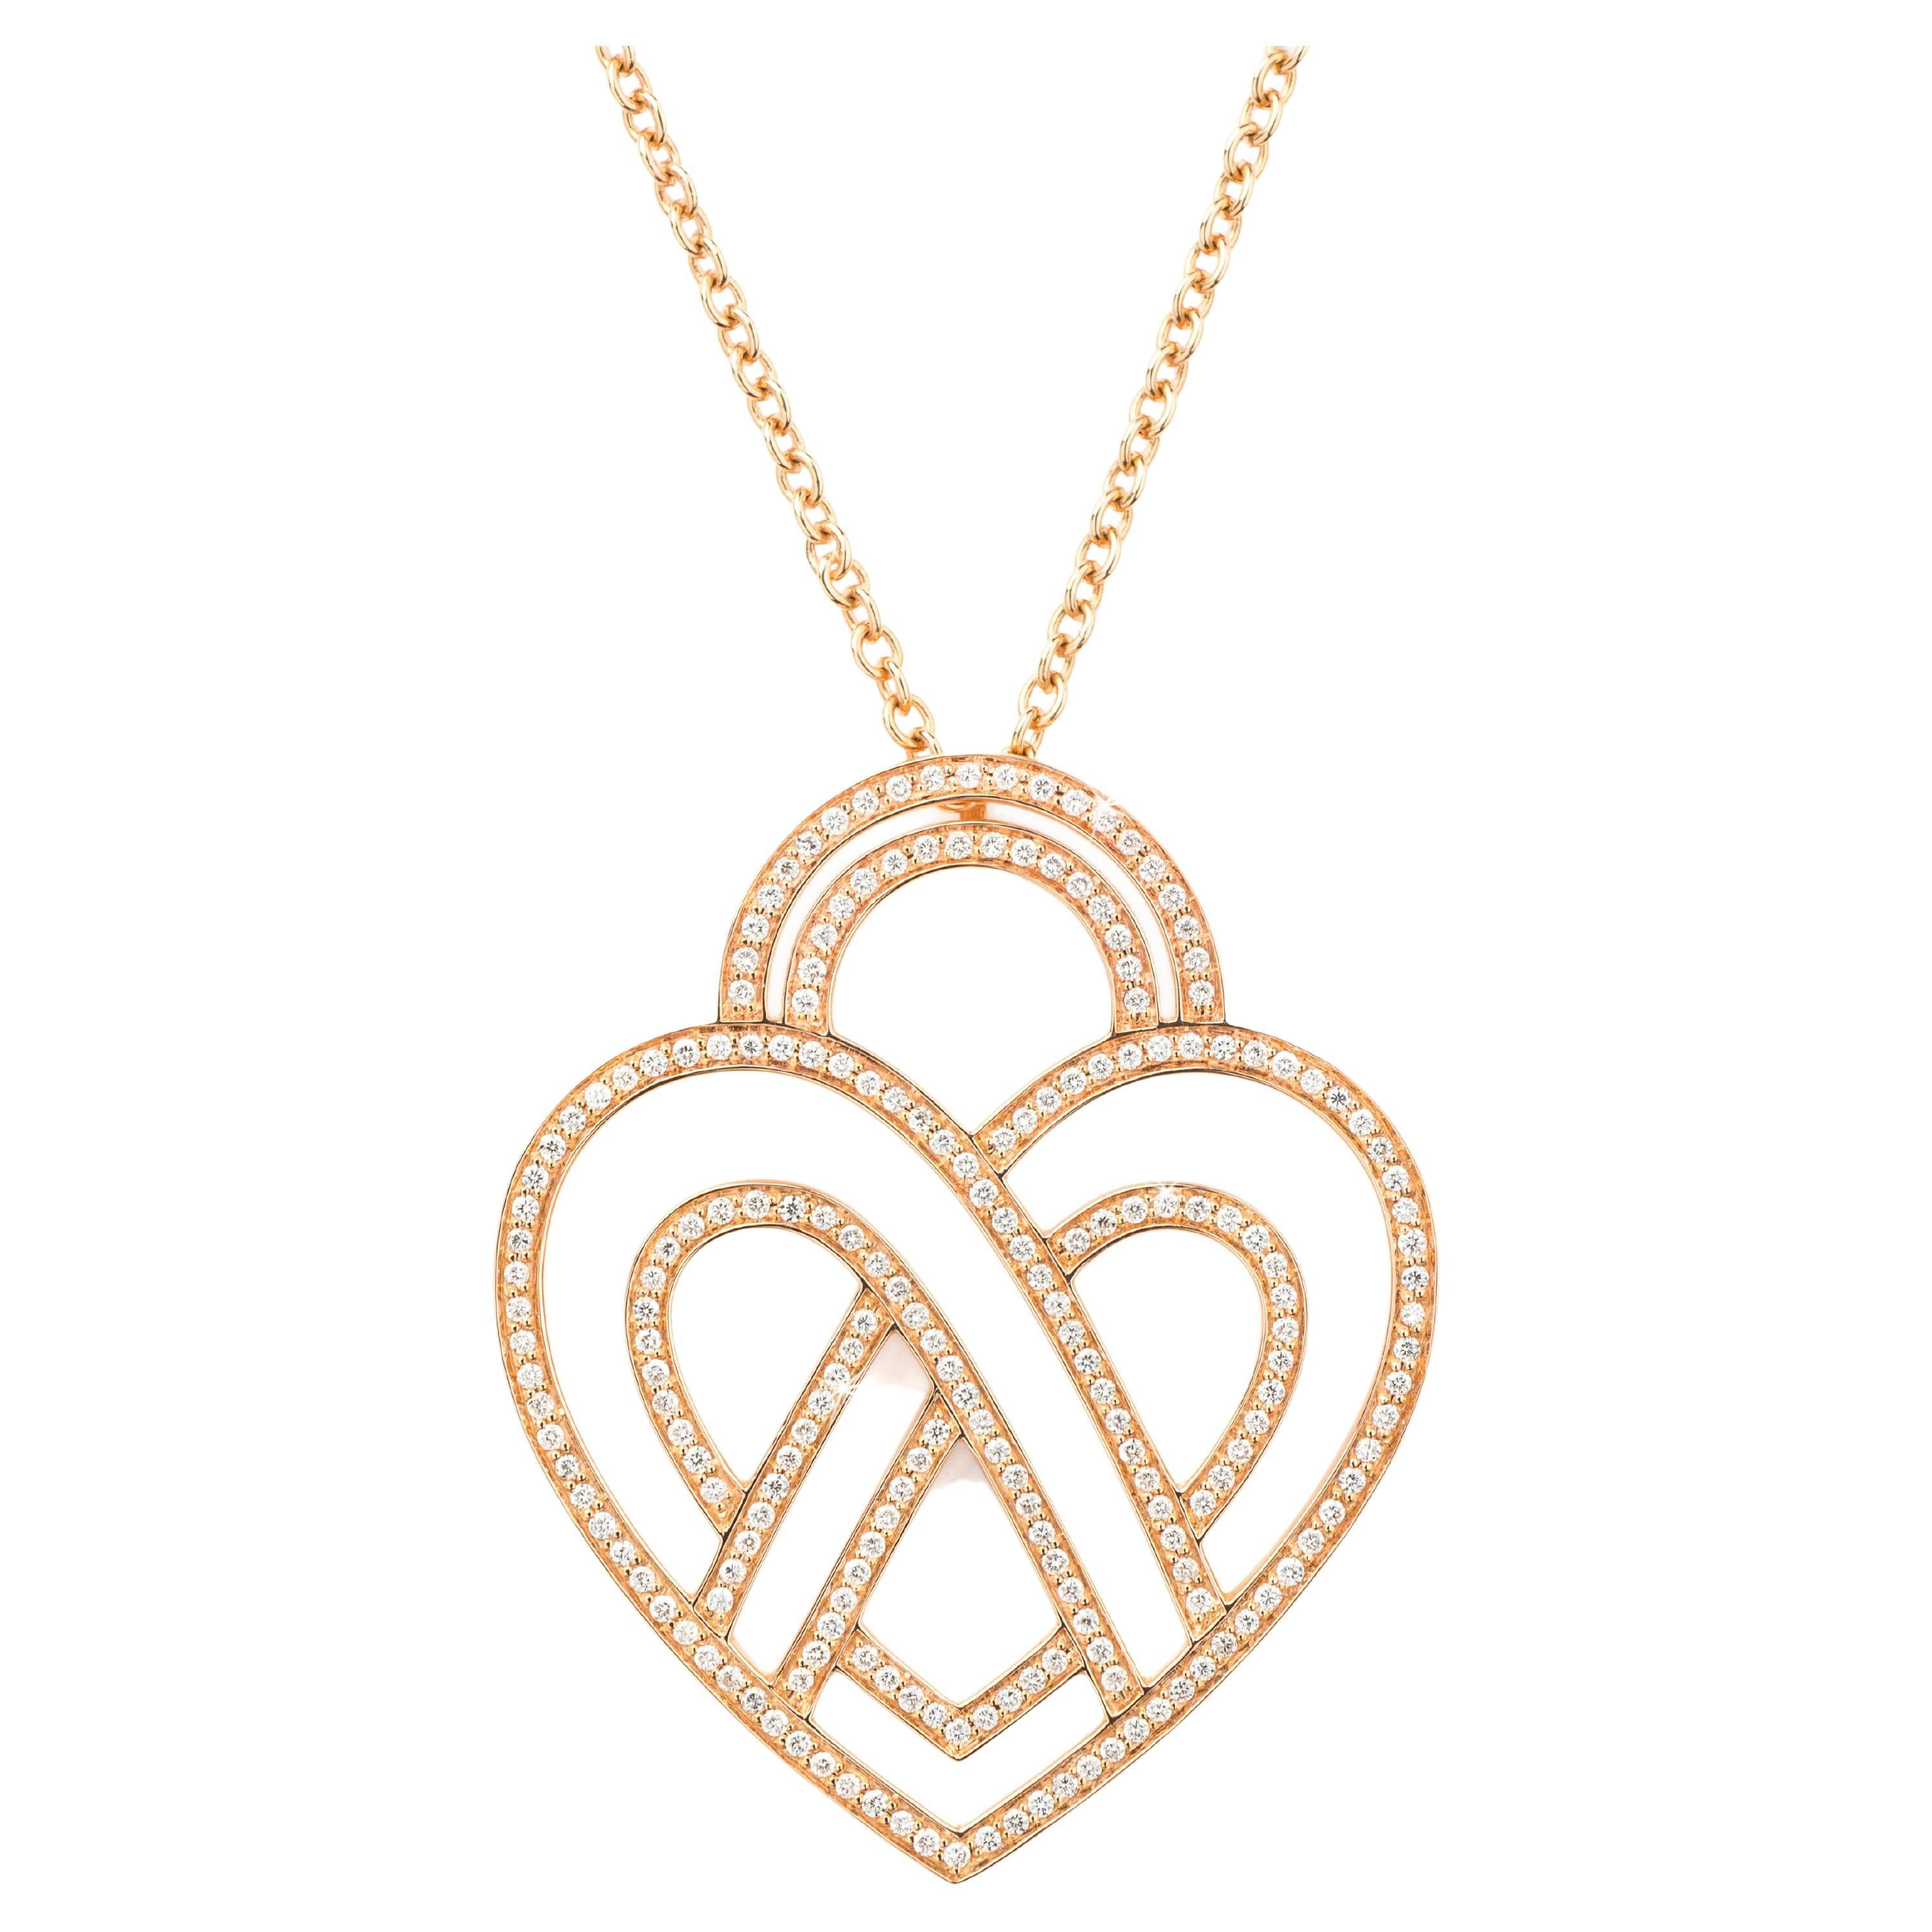 18 Carats Gold and Diamonds necklace, Rose Gold, Coeur Entrelacé Collection